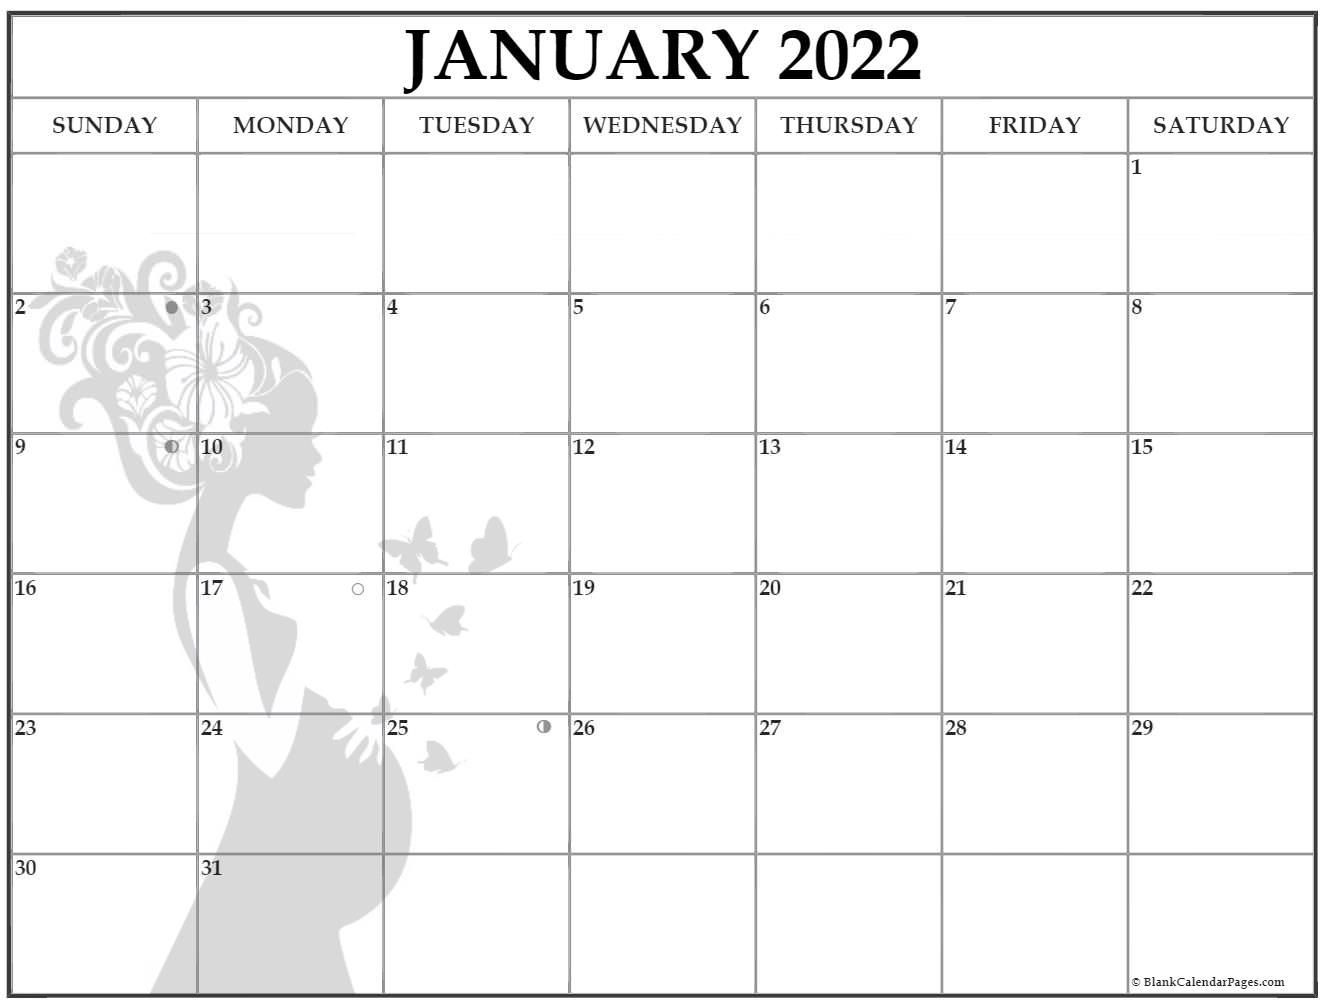 January 2022 Pregnancy Calendar | Fertility Calendar